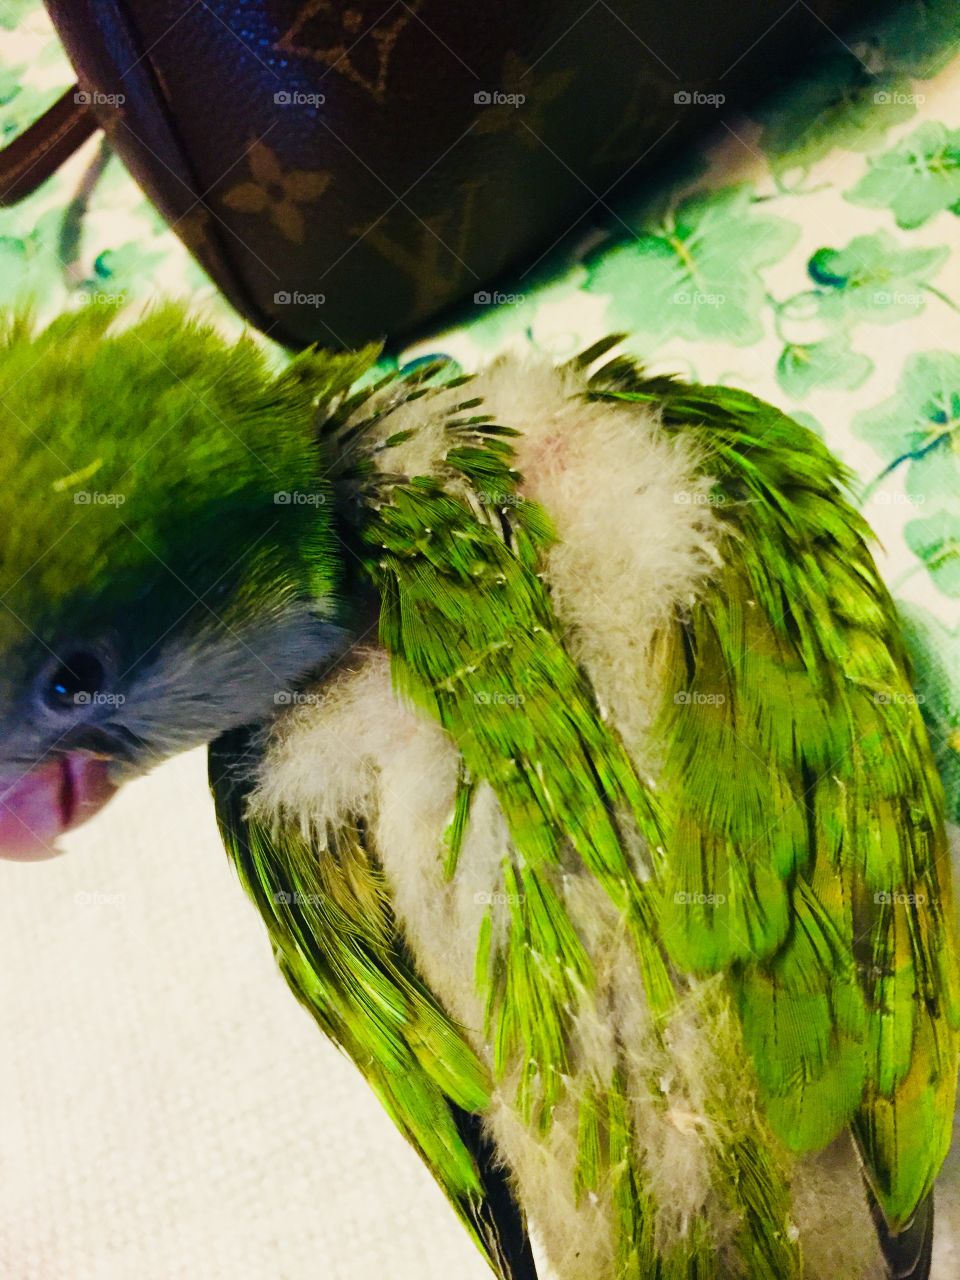 Quaker Parrot Baby feathers vibrant greet soft bird Happy June